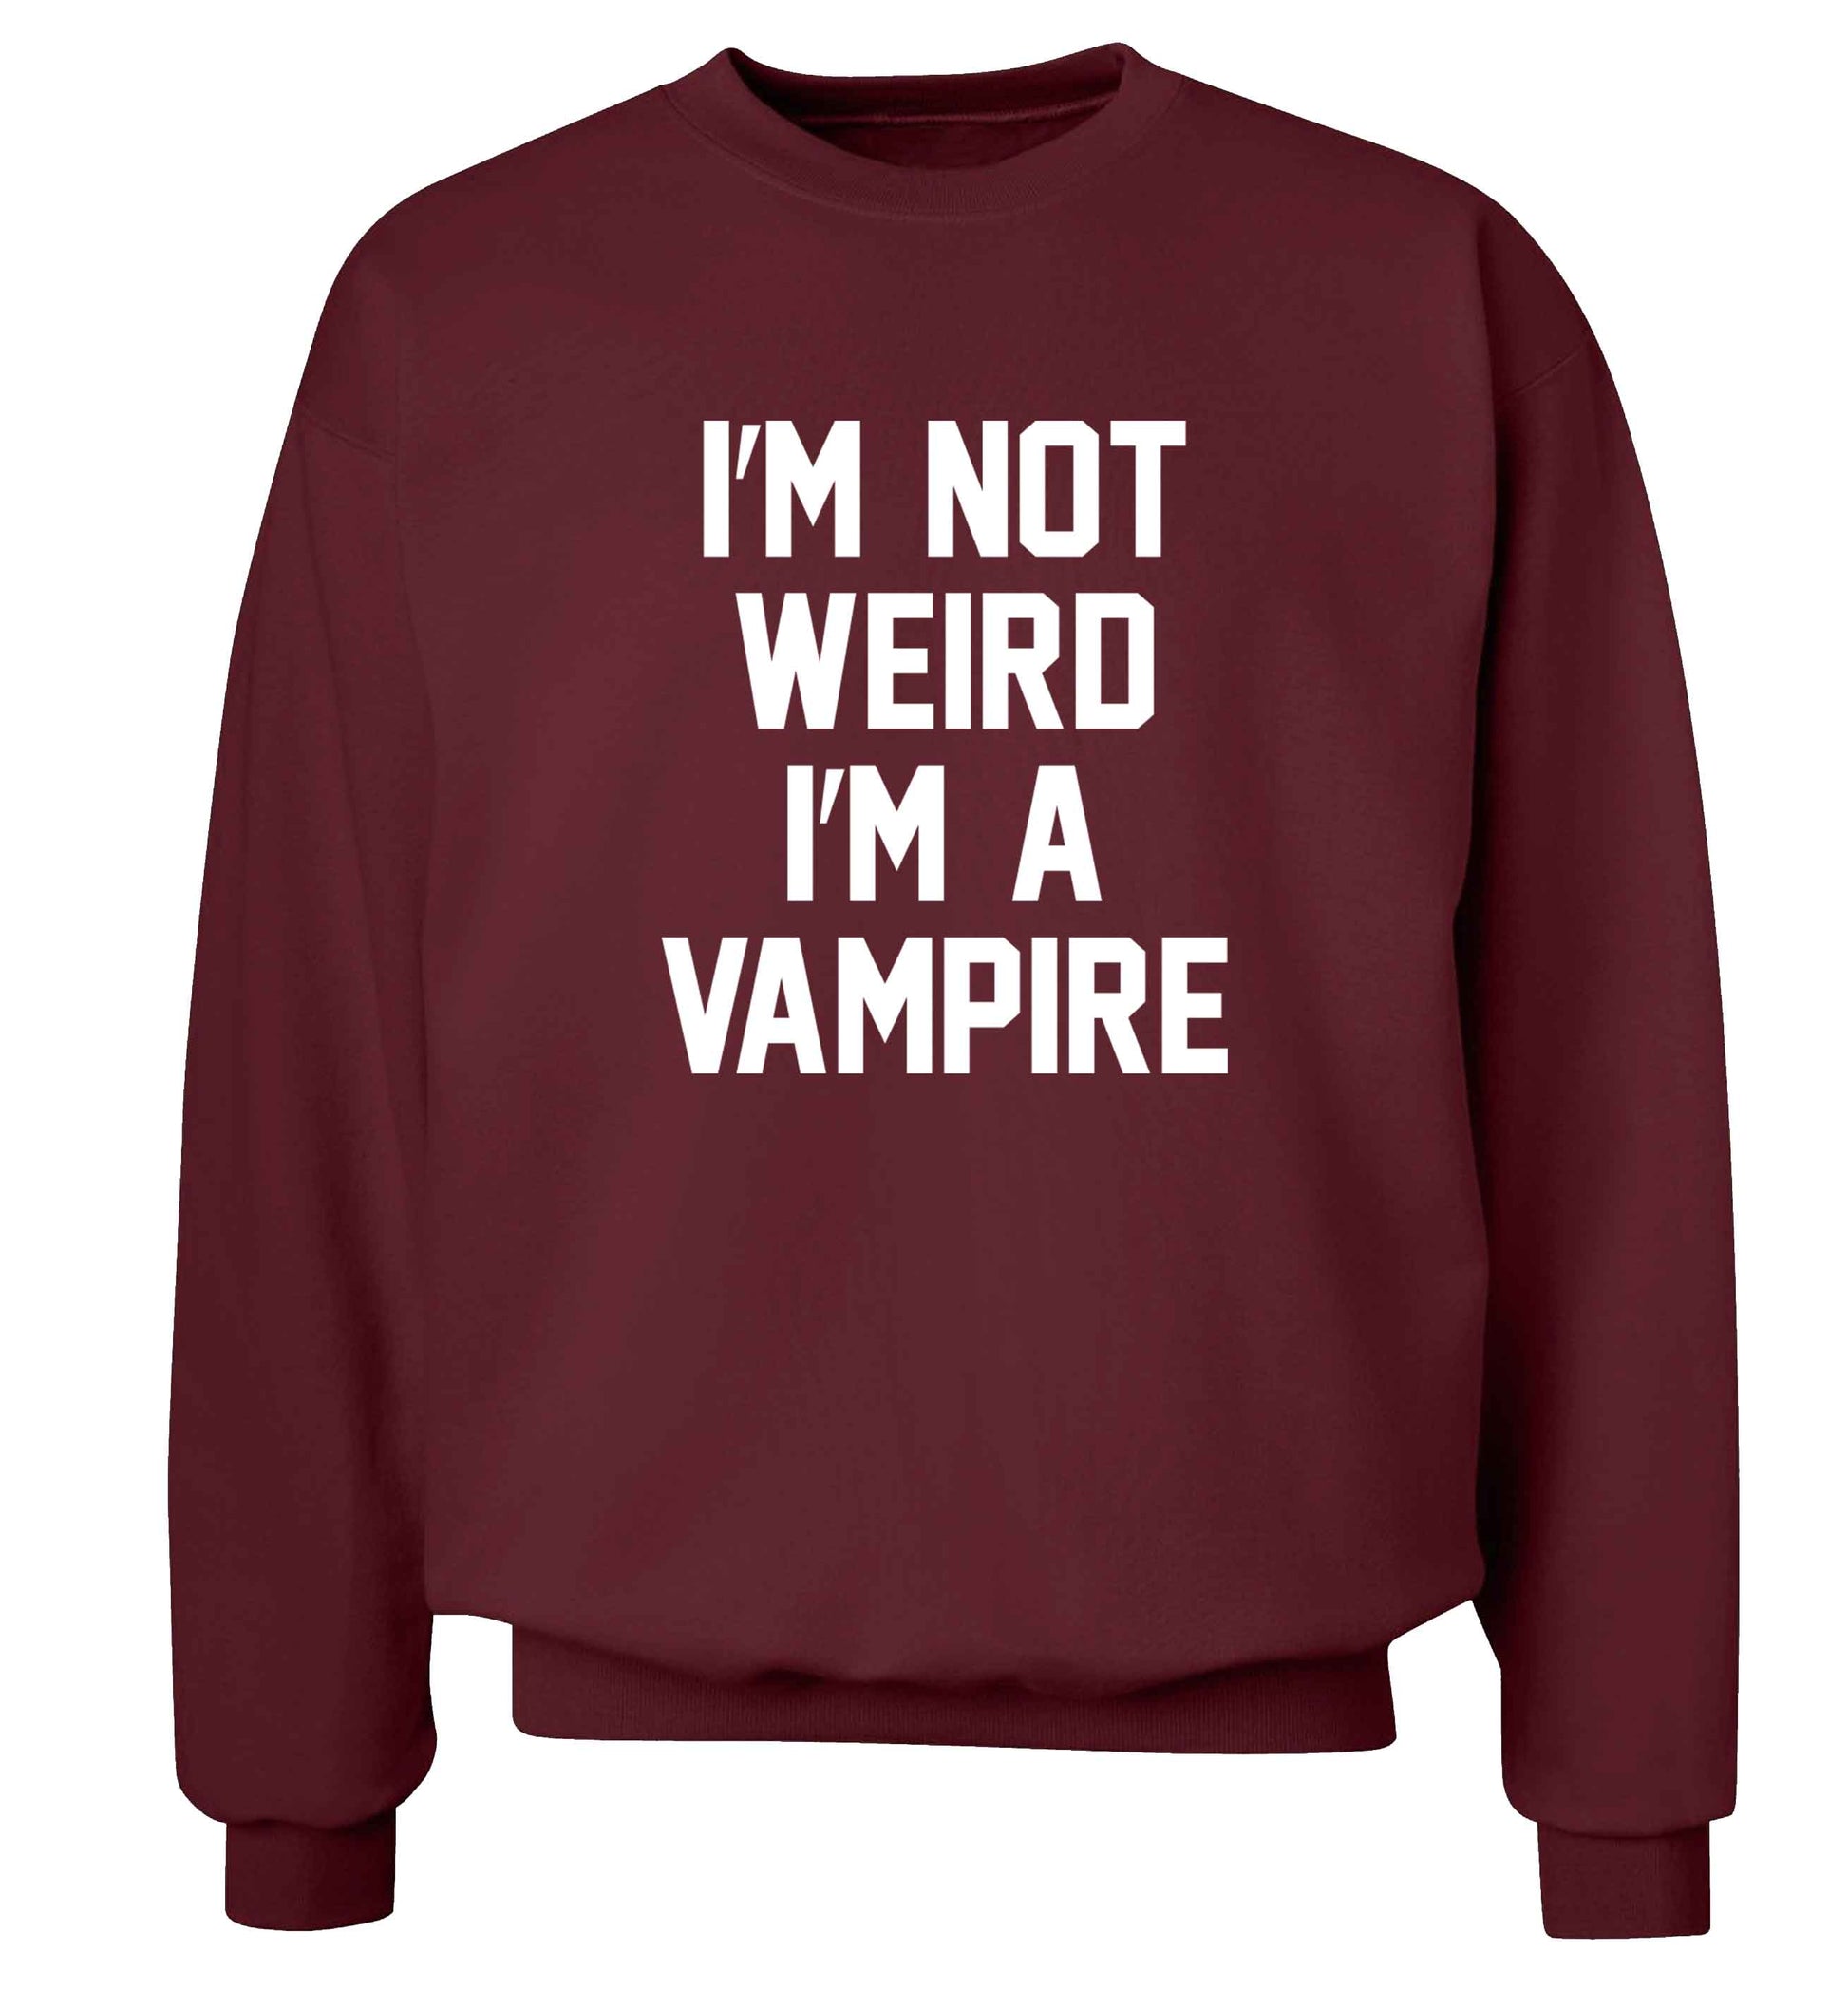 I'm not weird I'm a vampire adult's unisex maroon sweater 2XL